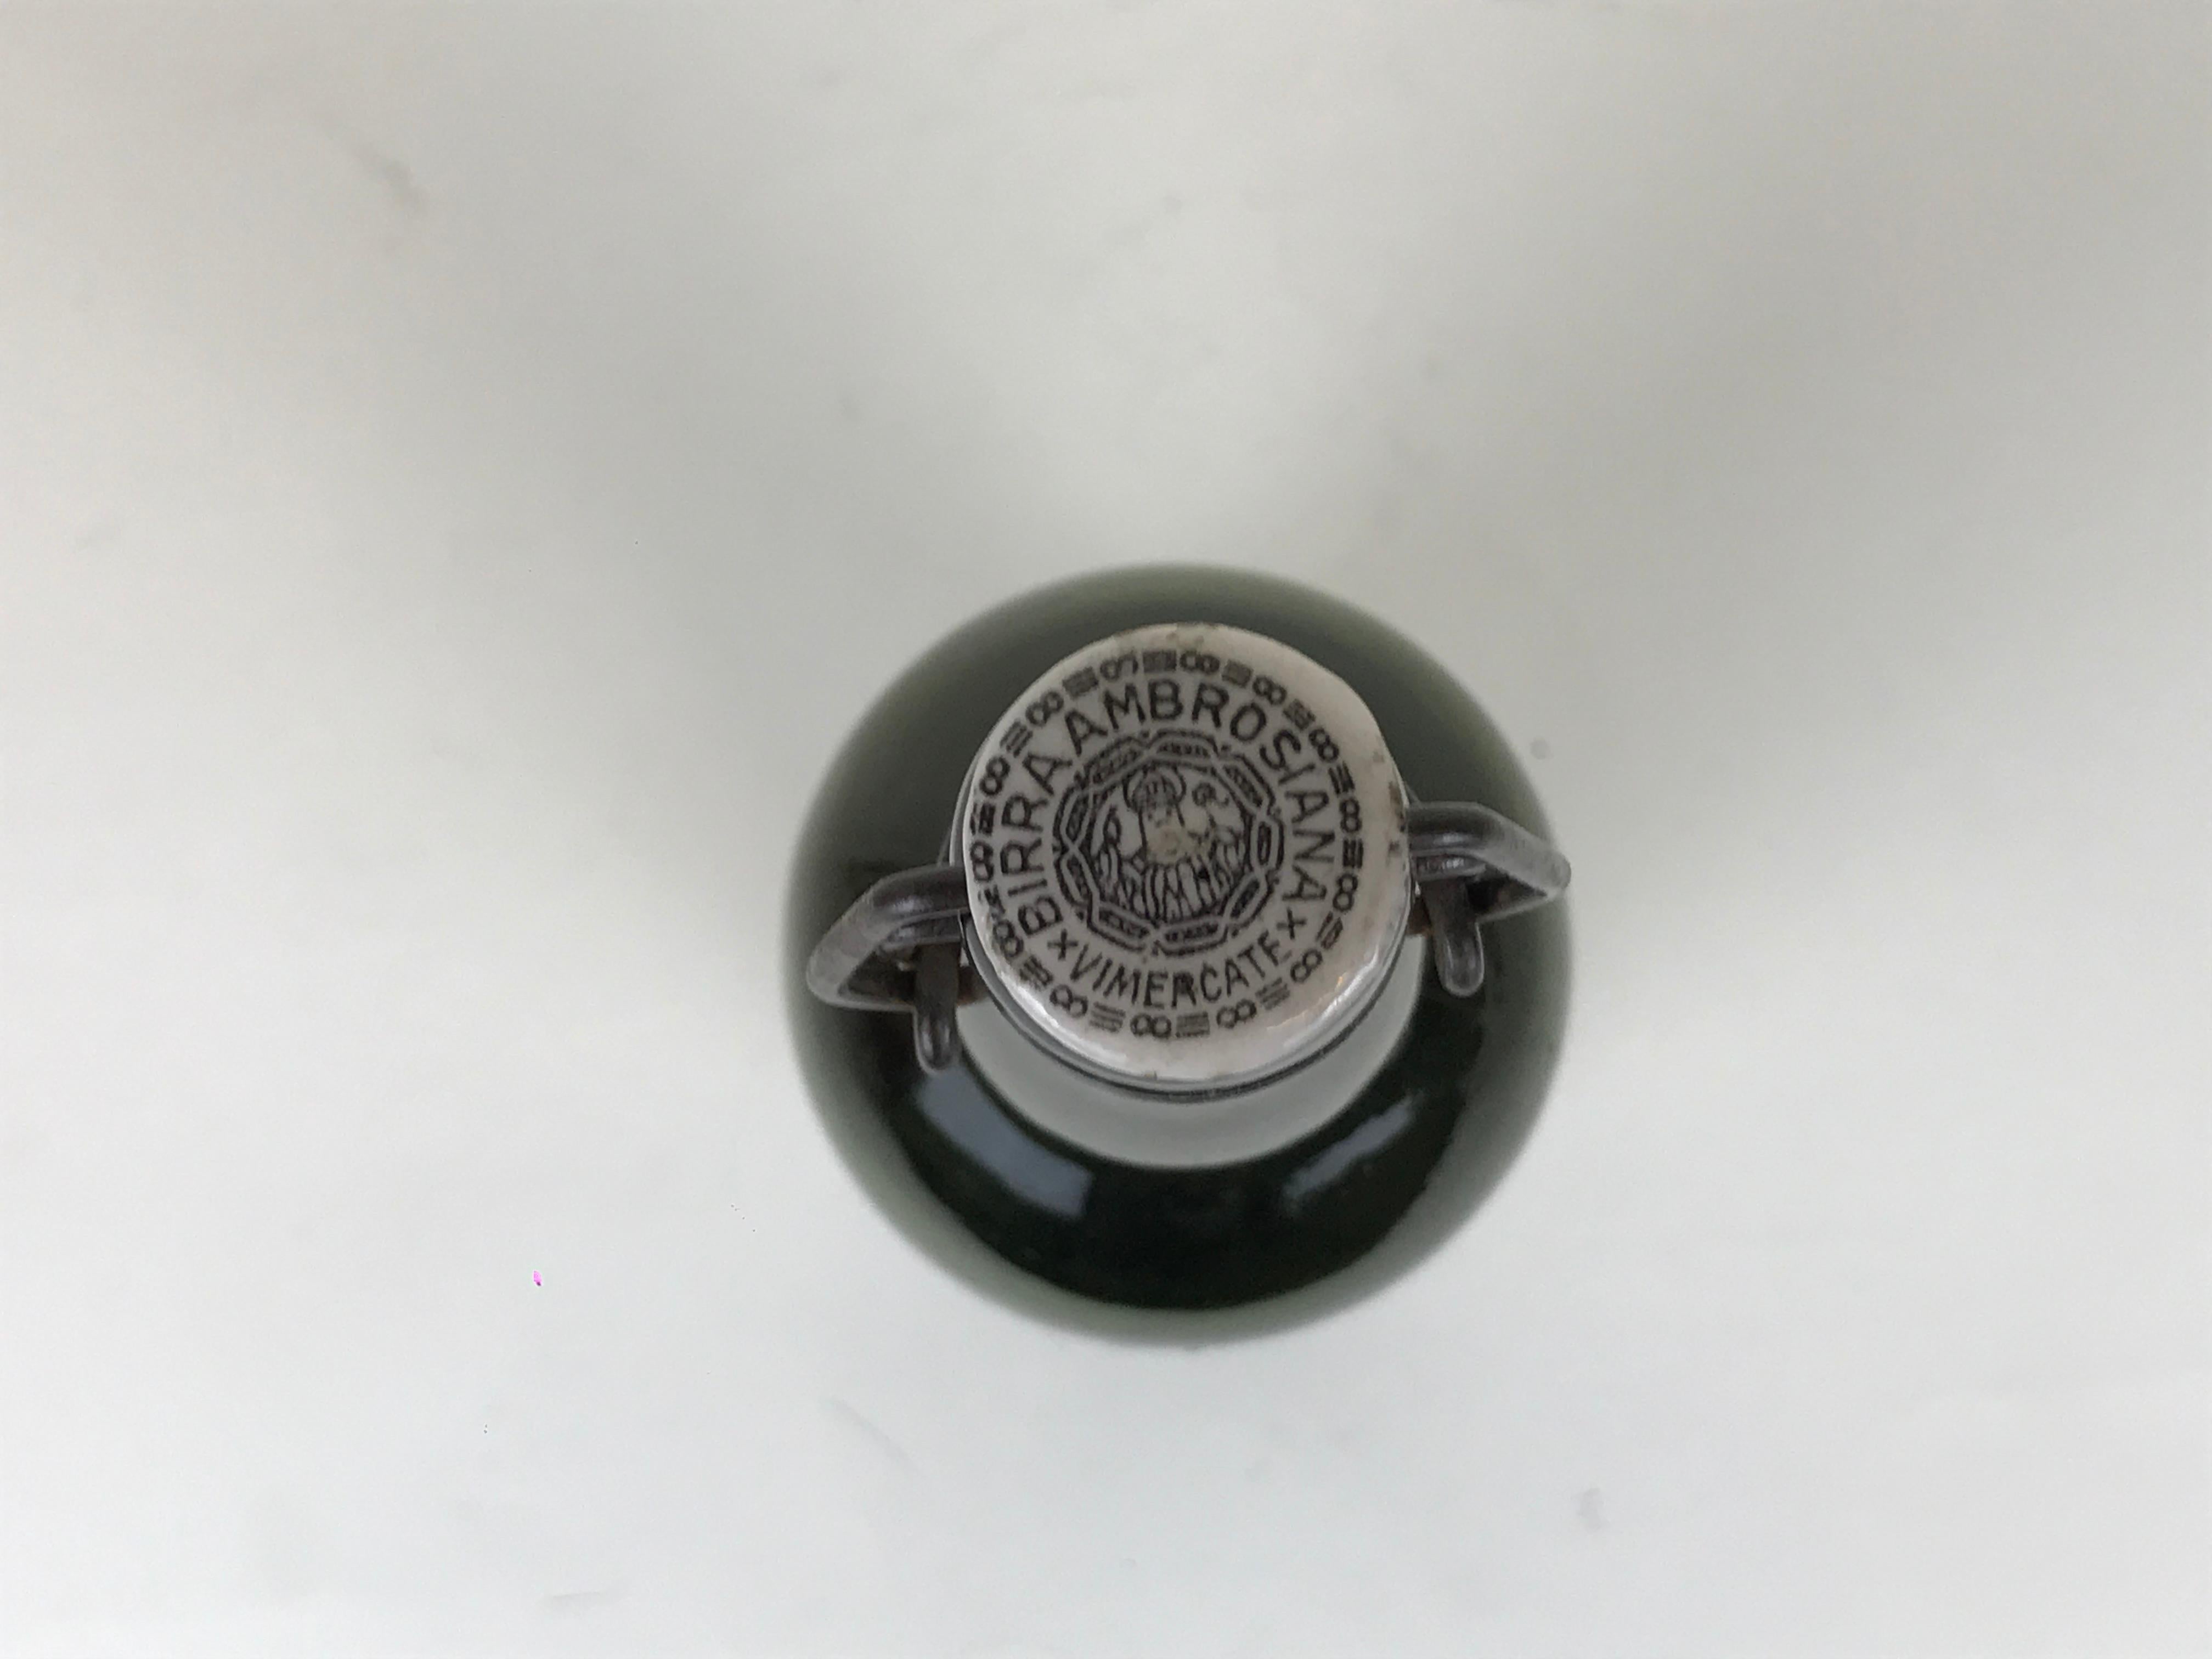 1950s Vintage Italian Birra Italia Beer Green Glass Bottle with Ceramic Stopper For Sale 4